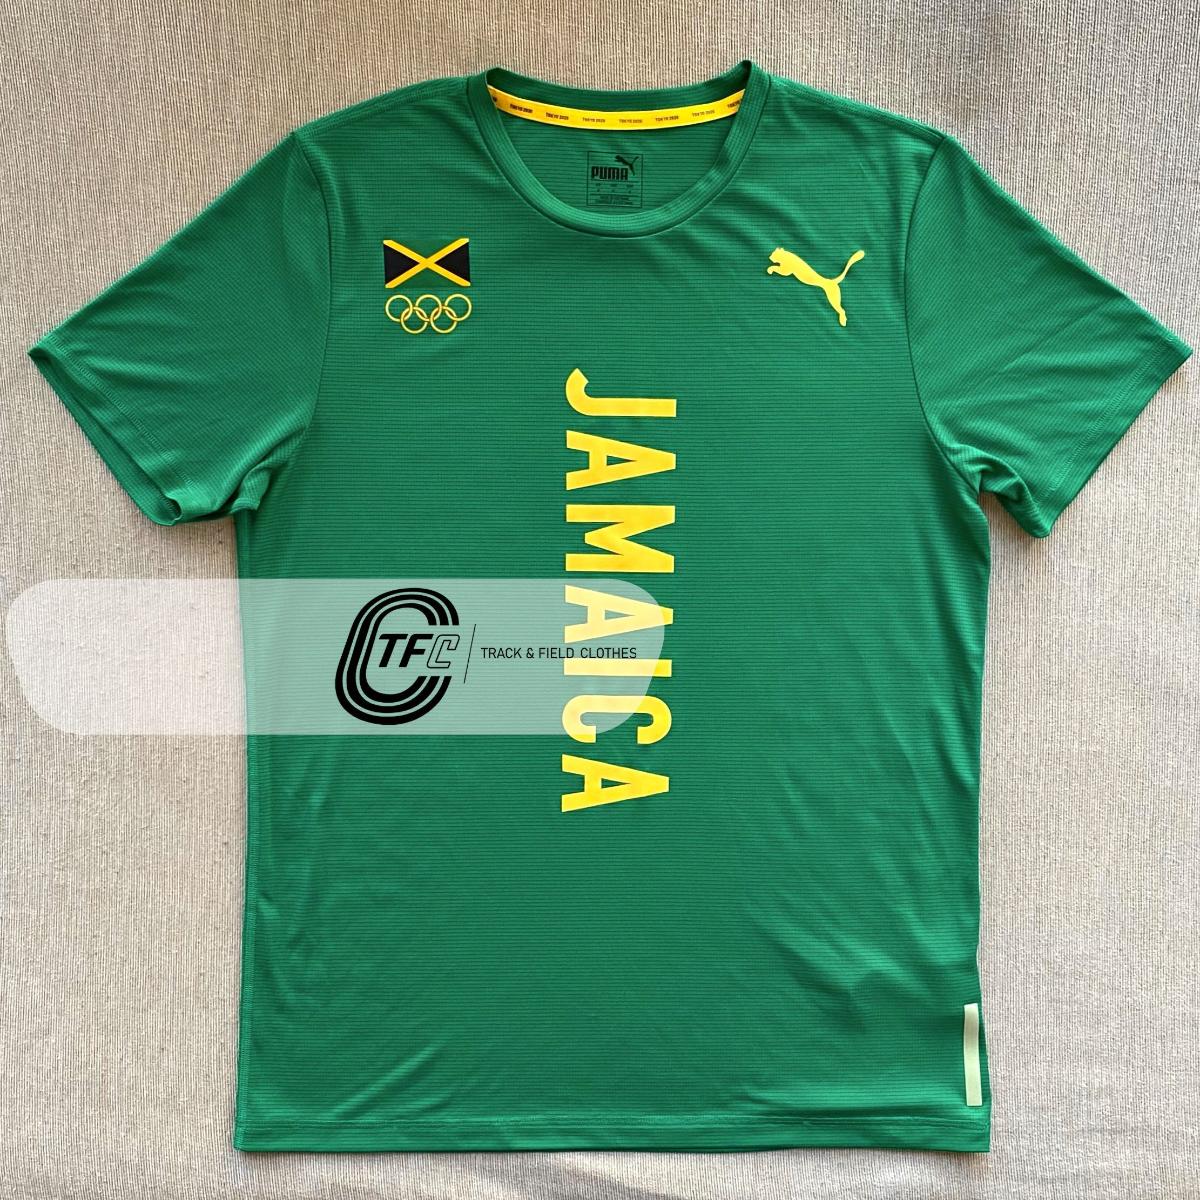 Puma Jamaica Olympic Team Pro Elite T-Shirt | Trackandfieldclothes